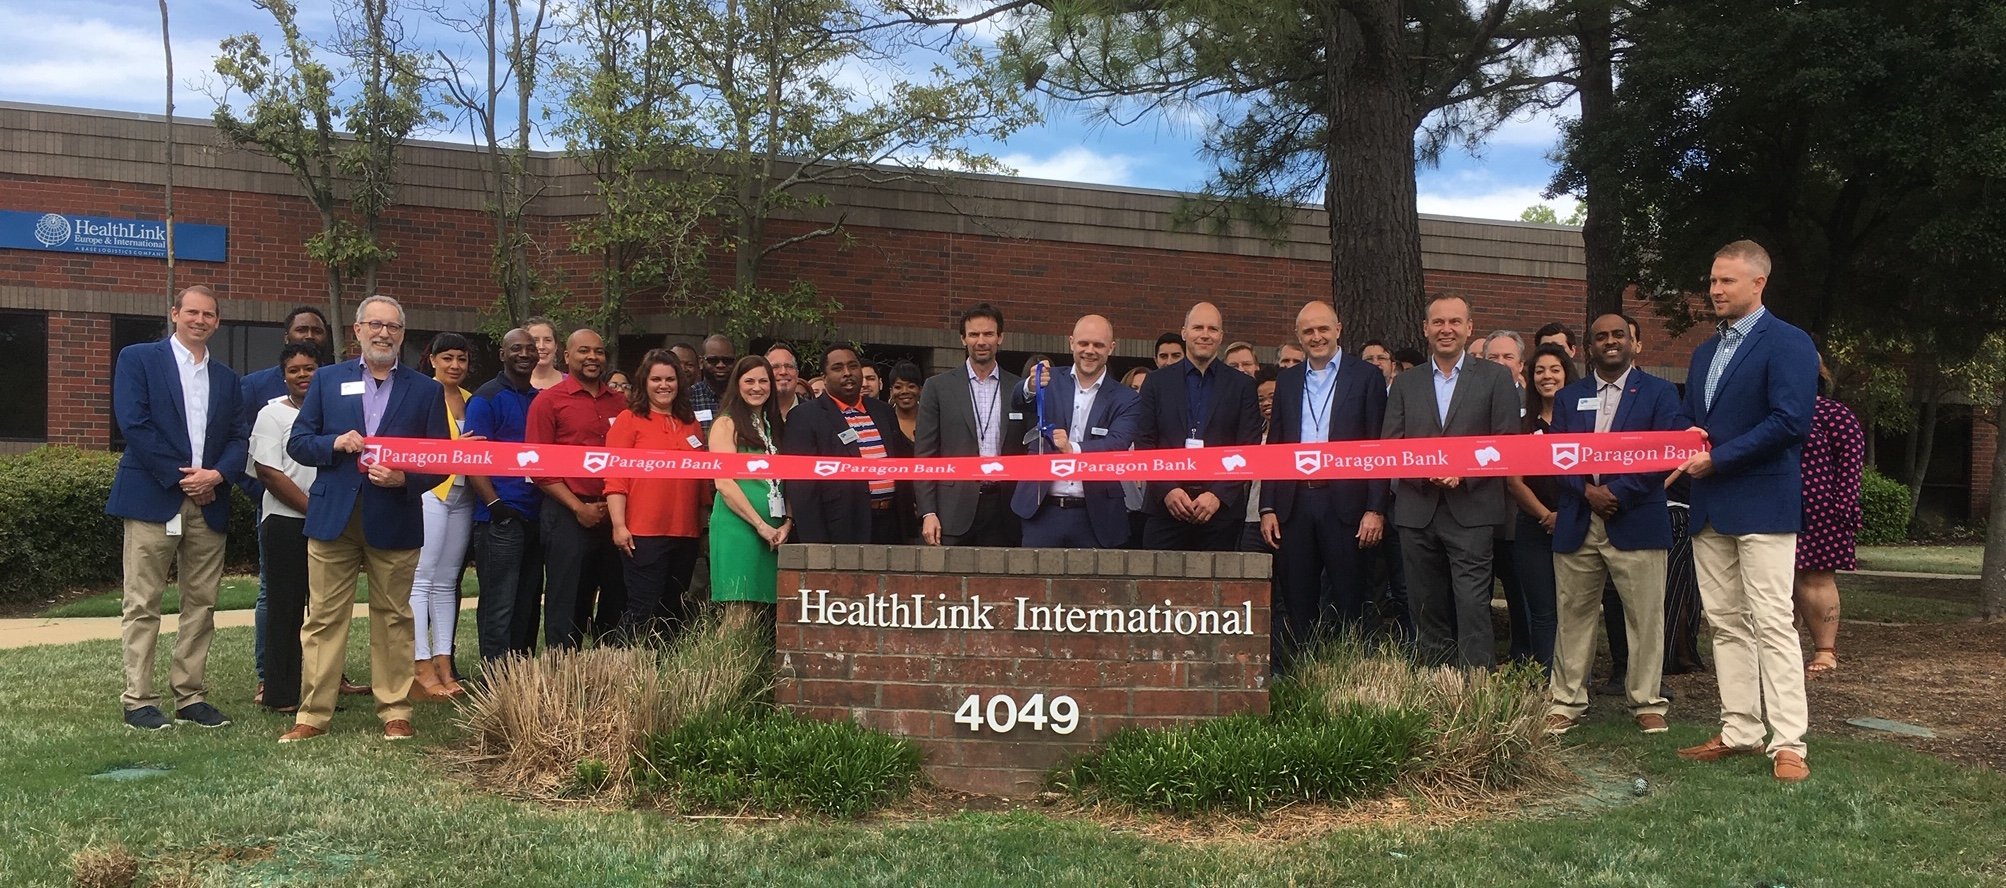 HealthLink International Opens State-of-the-Art Medical ...